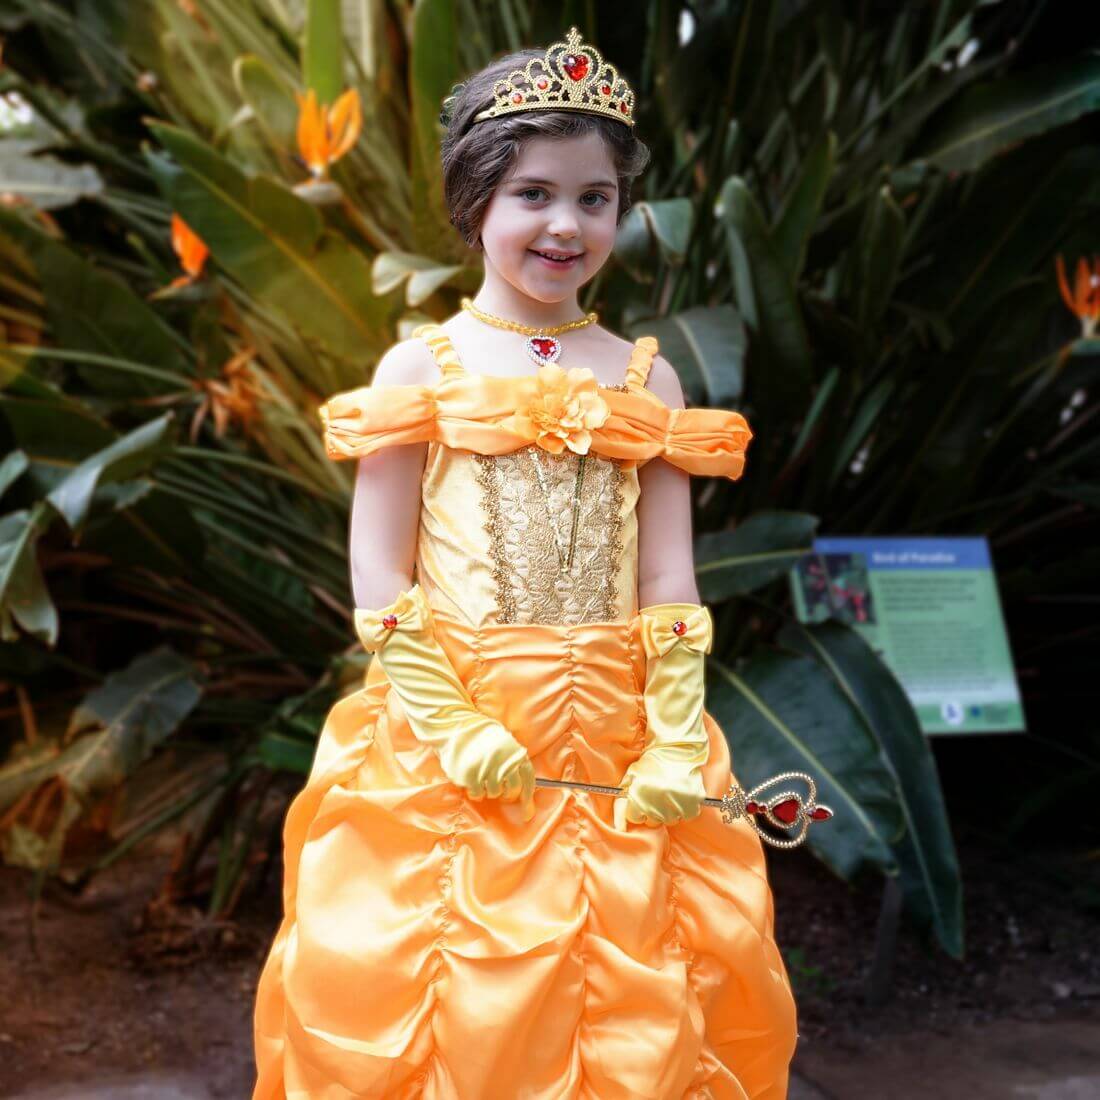 Girl in a tiara wearing a yellow princess dress